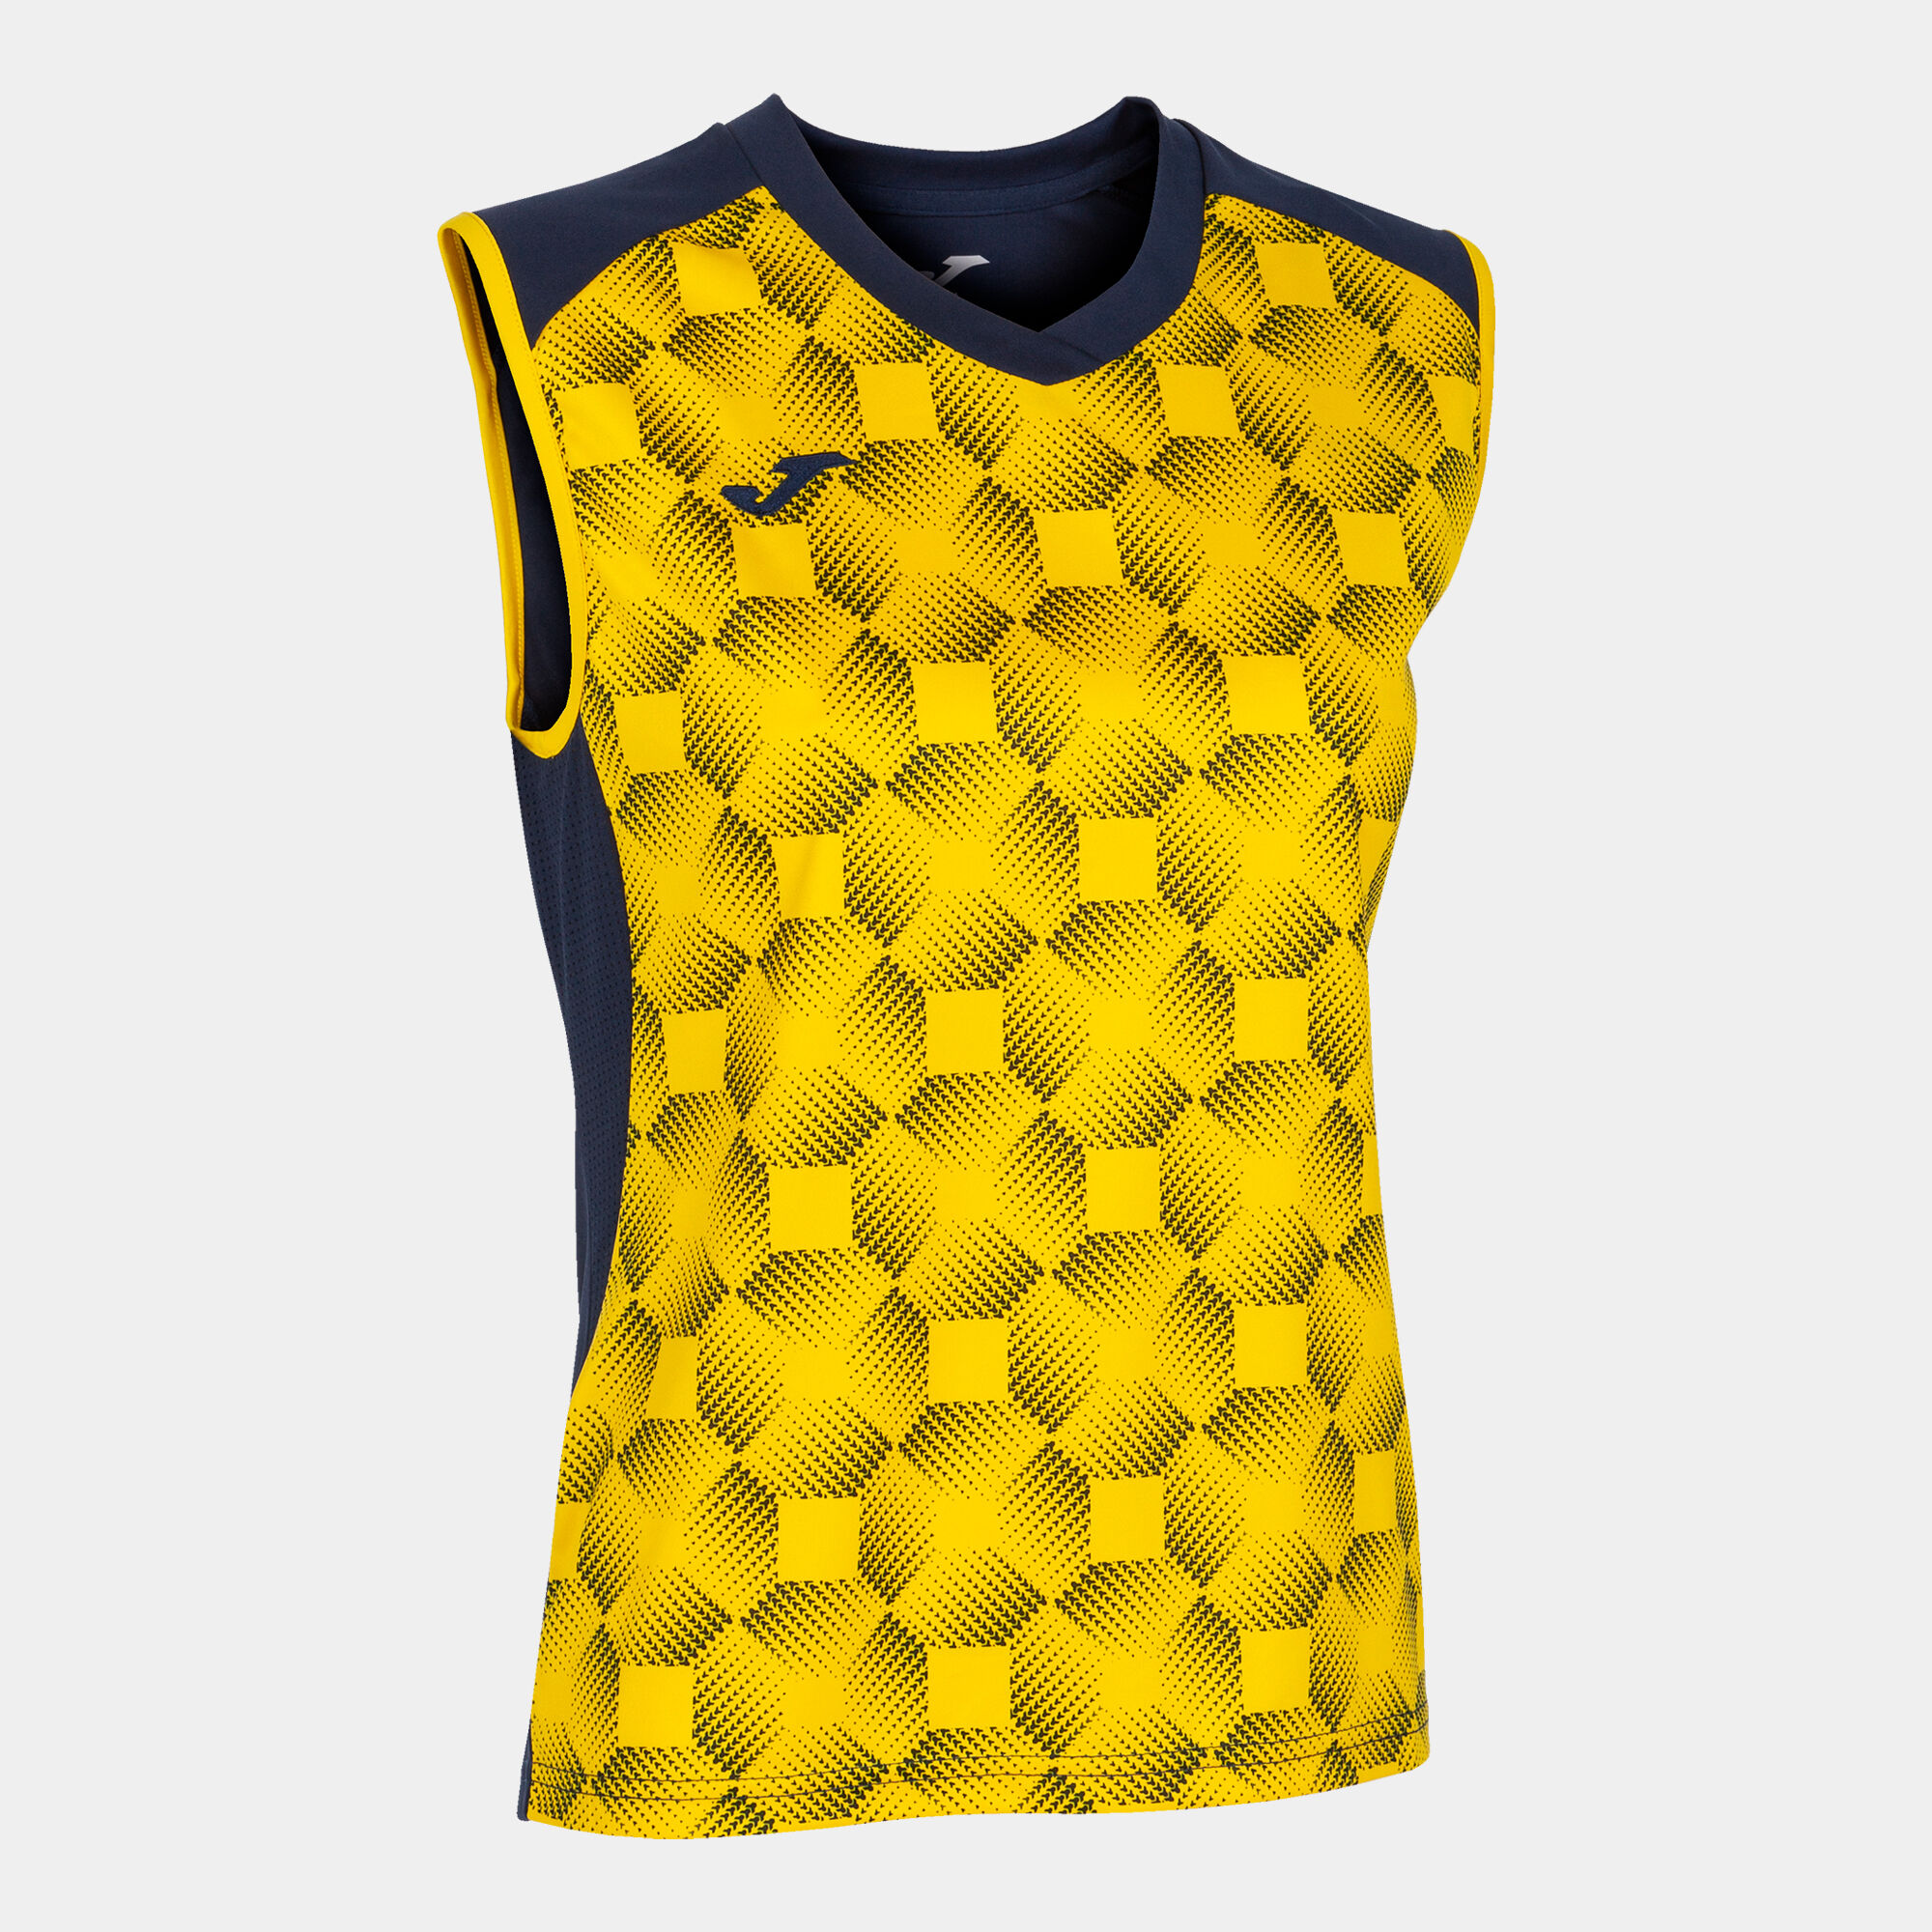 Camiseta sin mangas mujer Supernova III marino amarillo